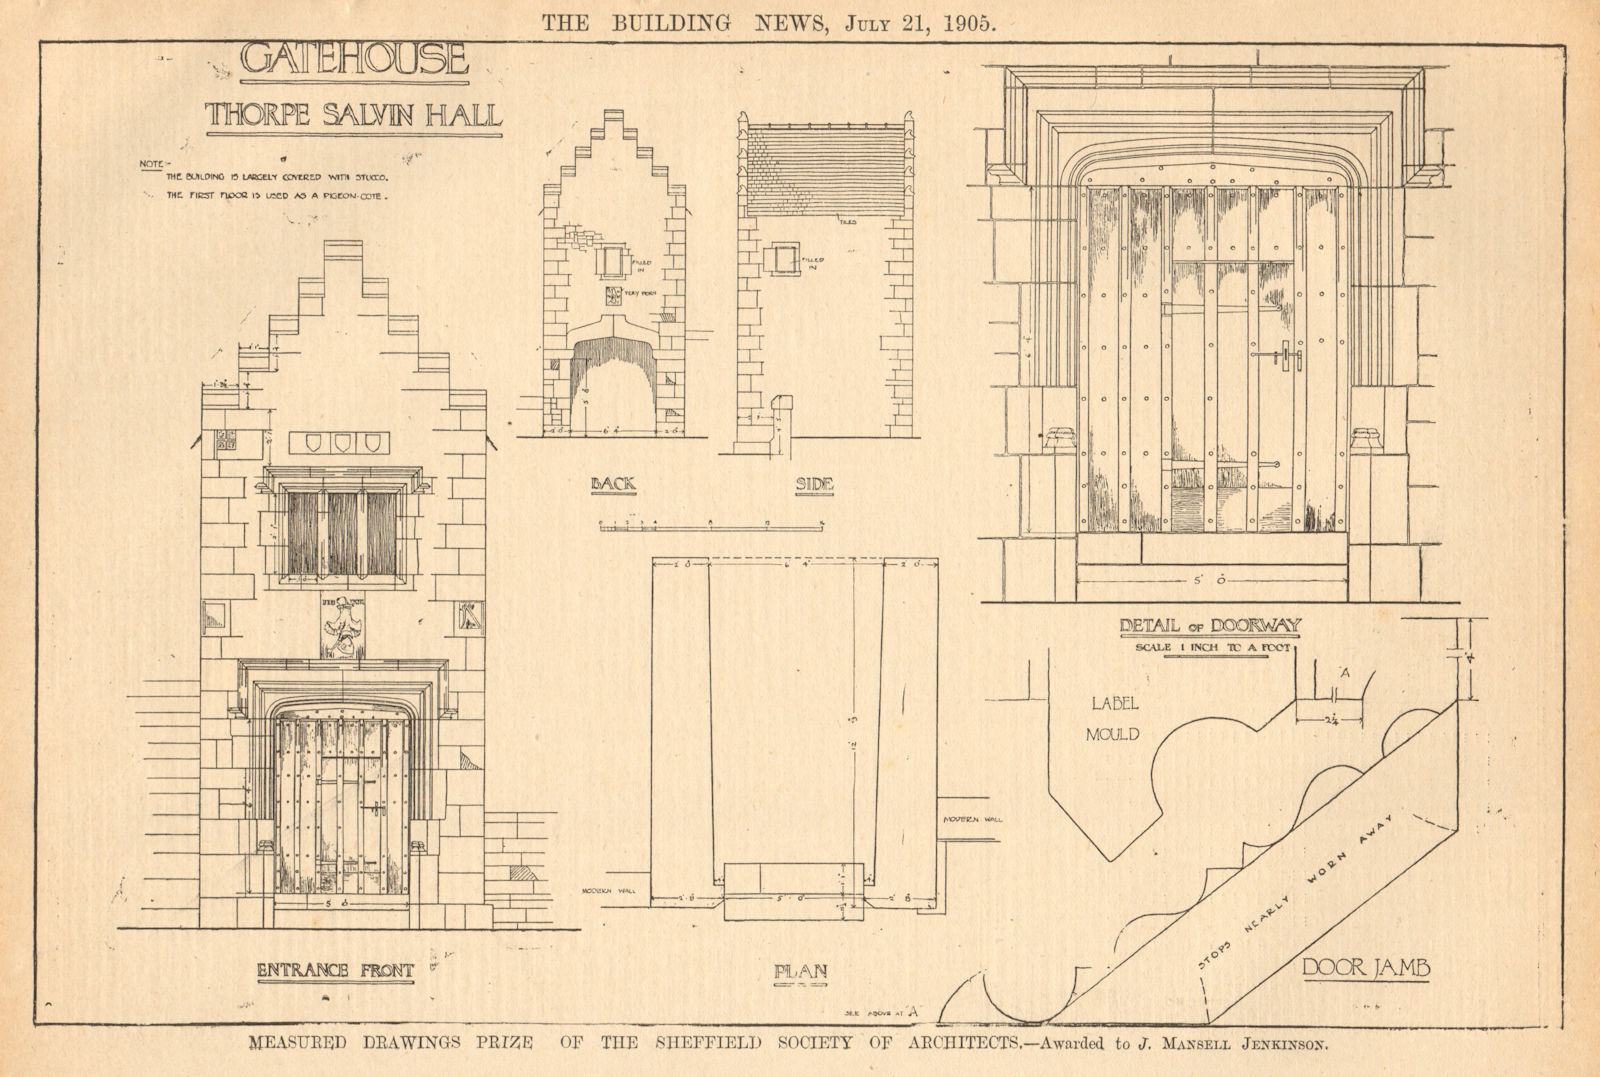 Gatehouse, Thorpe Salvin Hall, Yorkshire. Plans by J. Mansell Jenkinson 1905